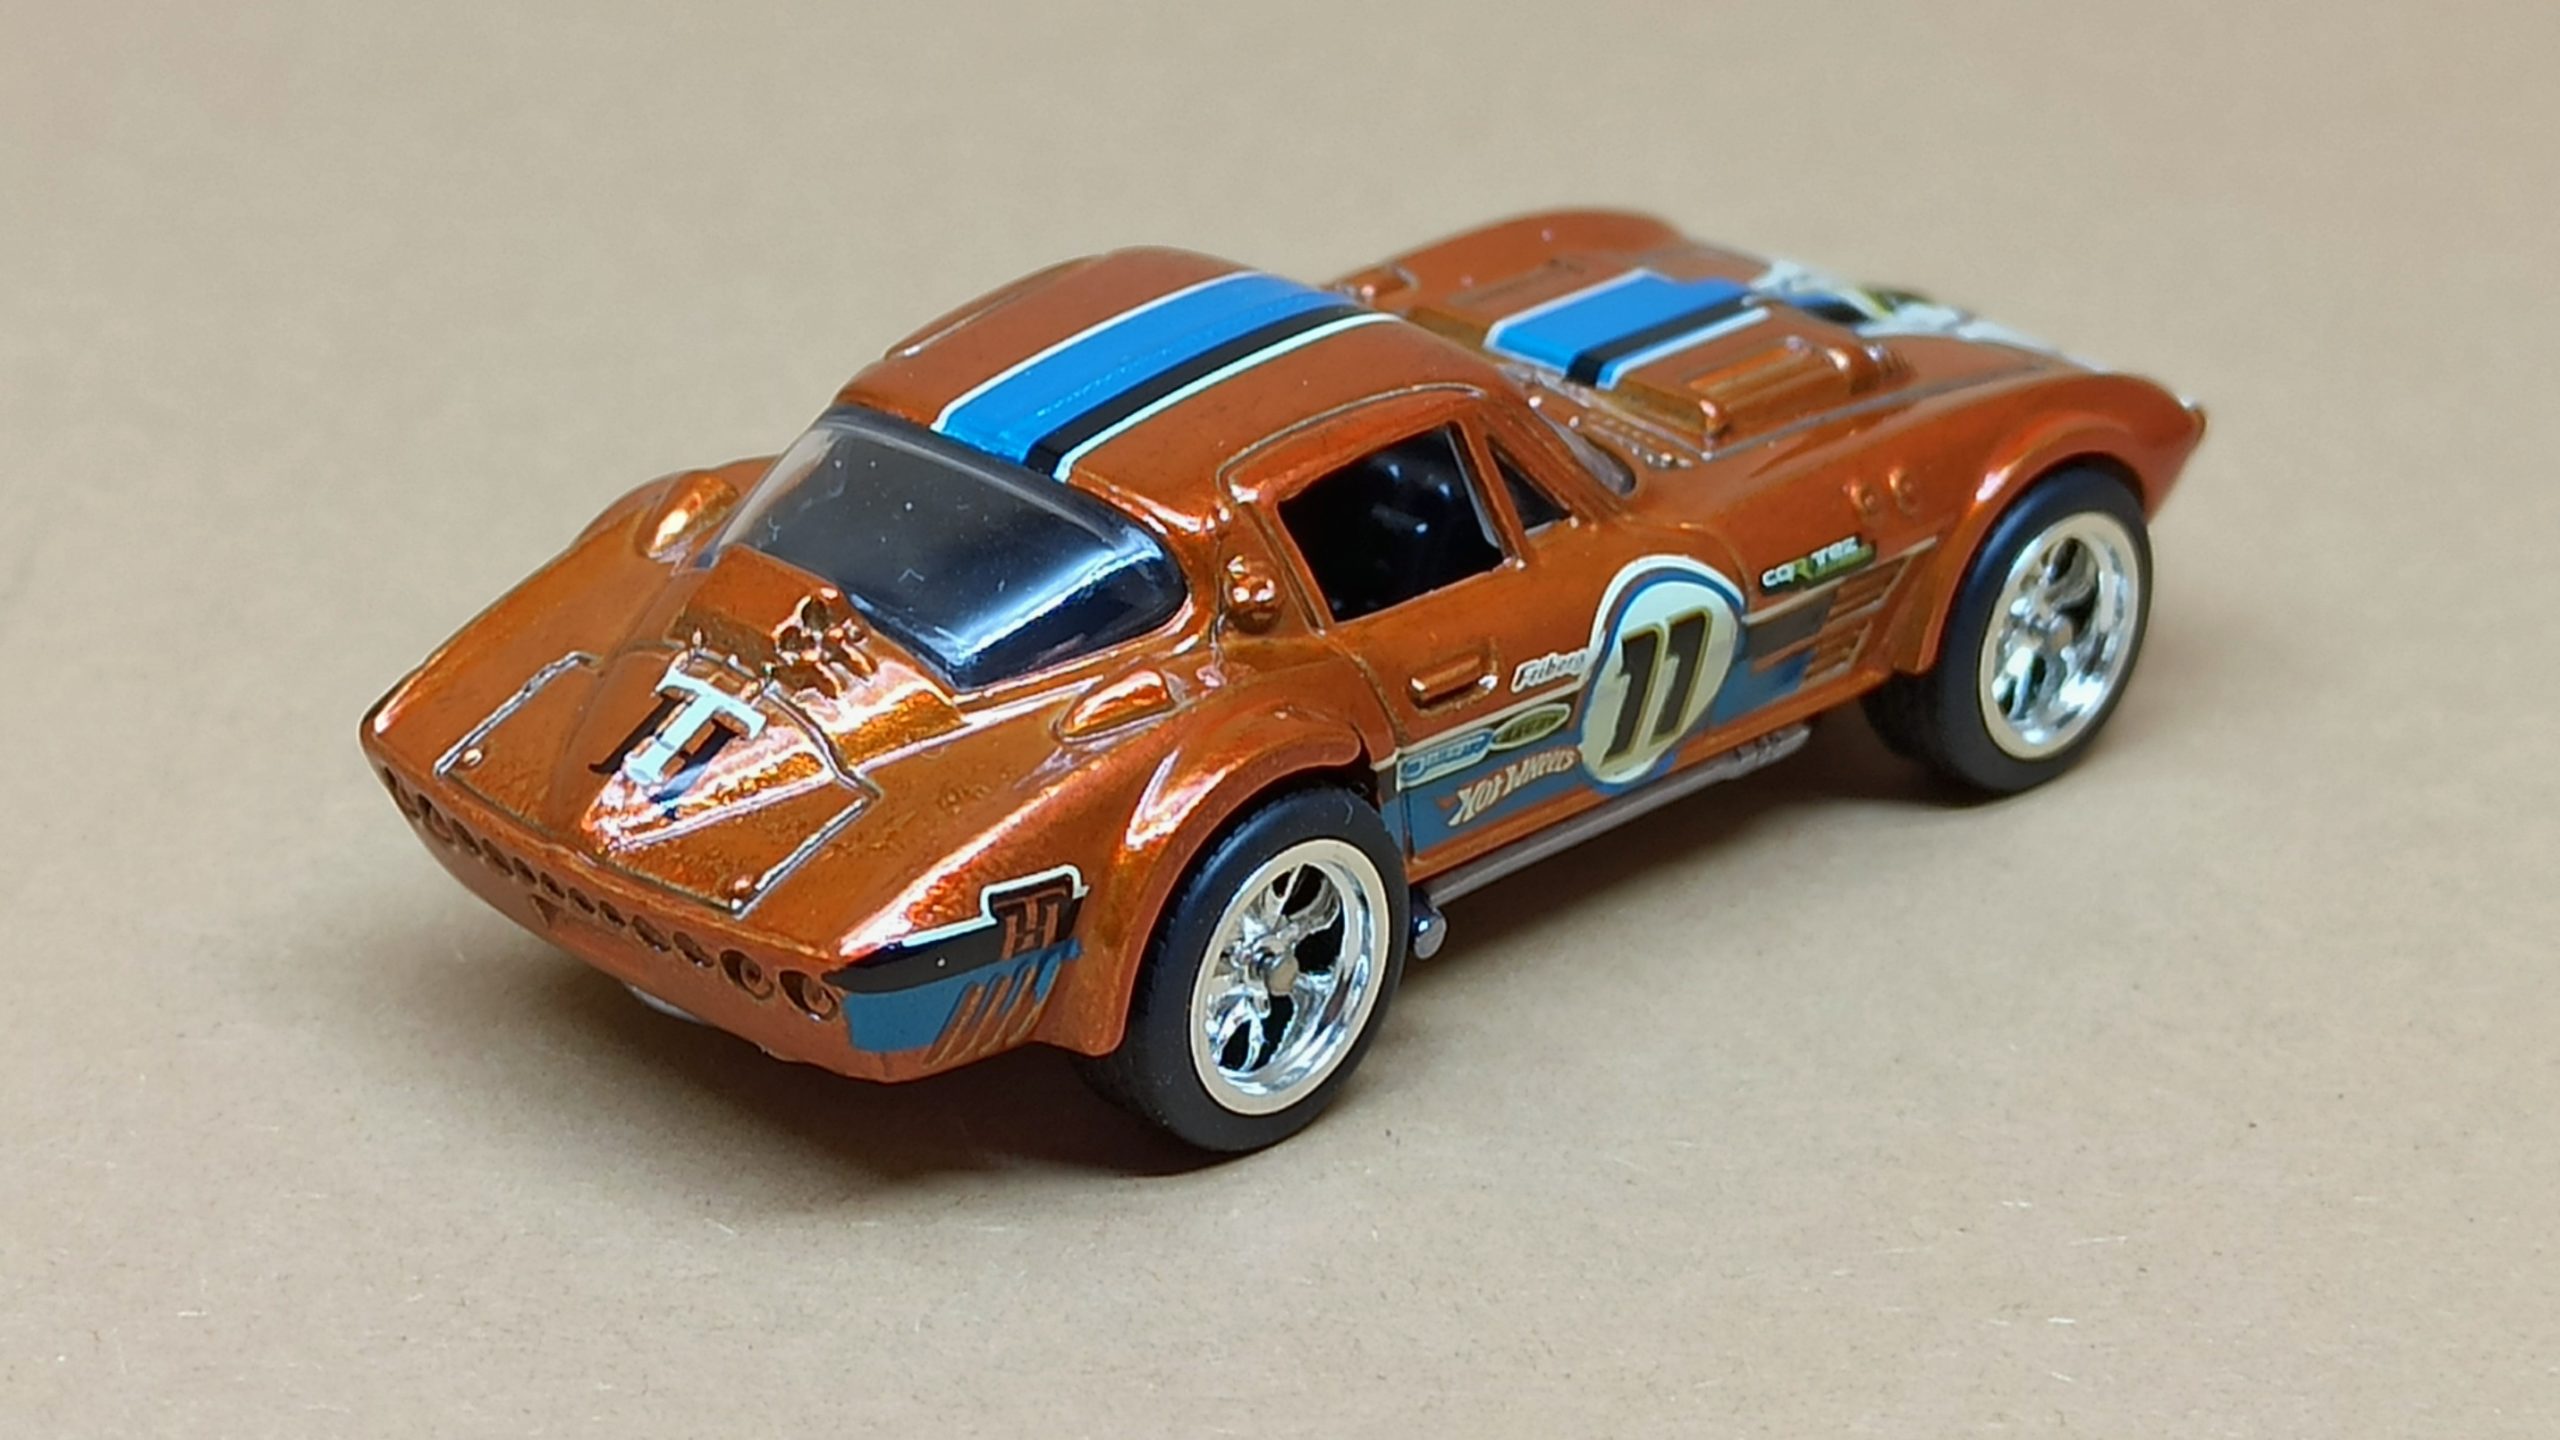 Hot Wheels Corvette Grand Sport (T9744) 2011 (59/244) Trea$ure Hunt$ (9/15) spectraflame orange Super Treasure Hunt (STH)